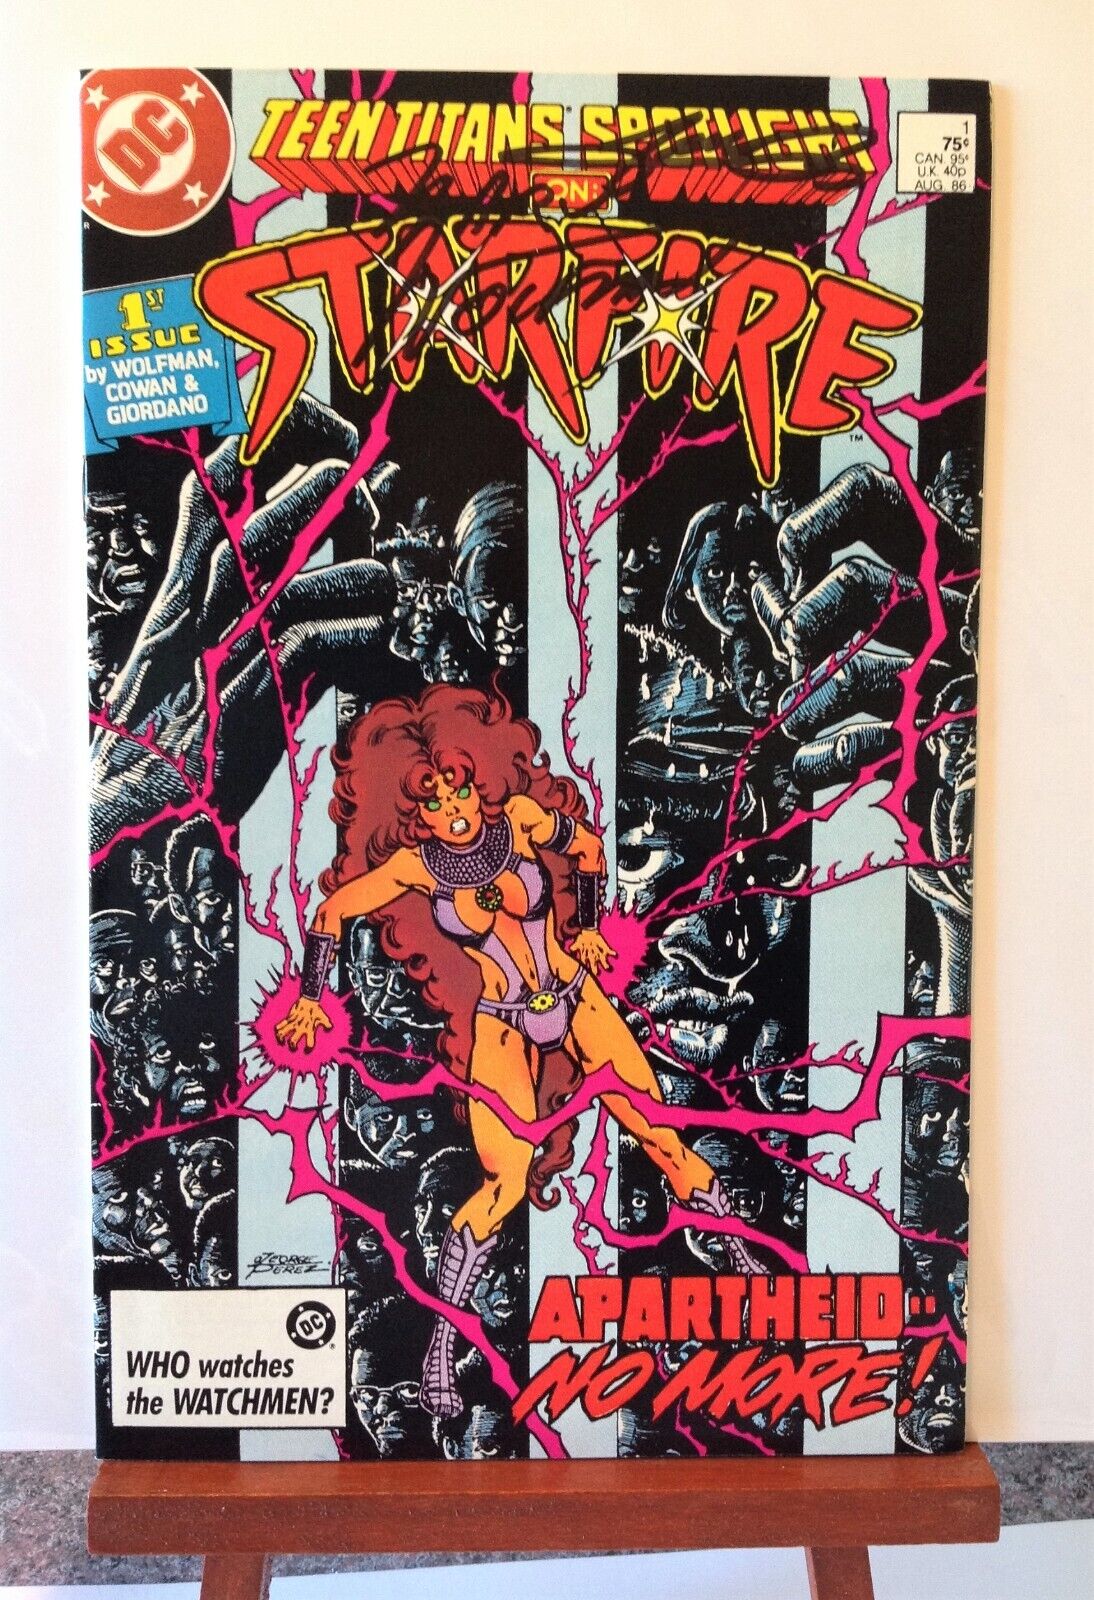 Teen Titans Spotlight Starfire #1 1986 George Perez and Marv Wolfman Signed